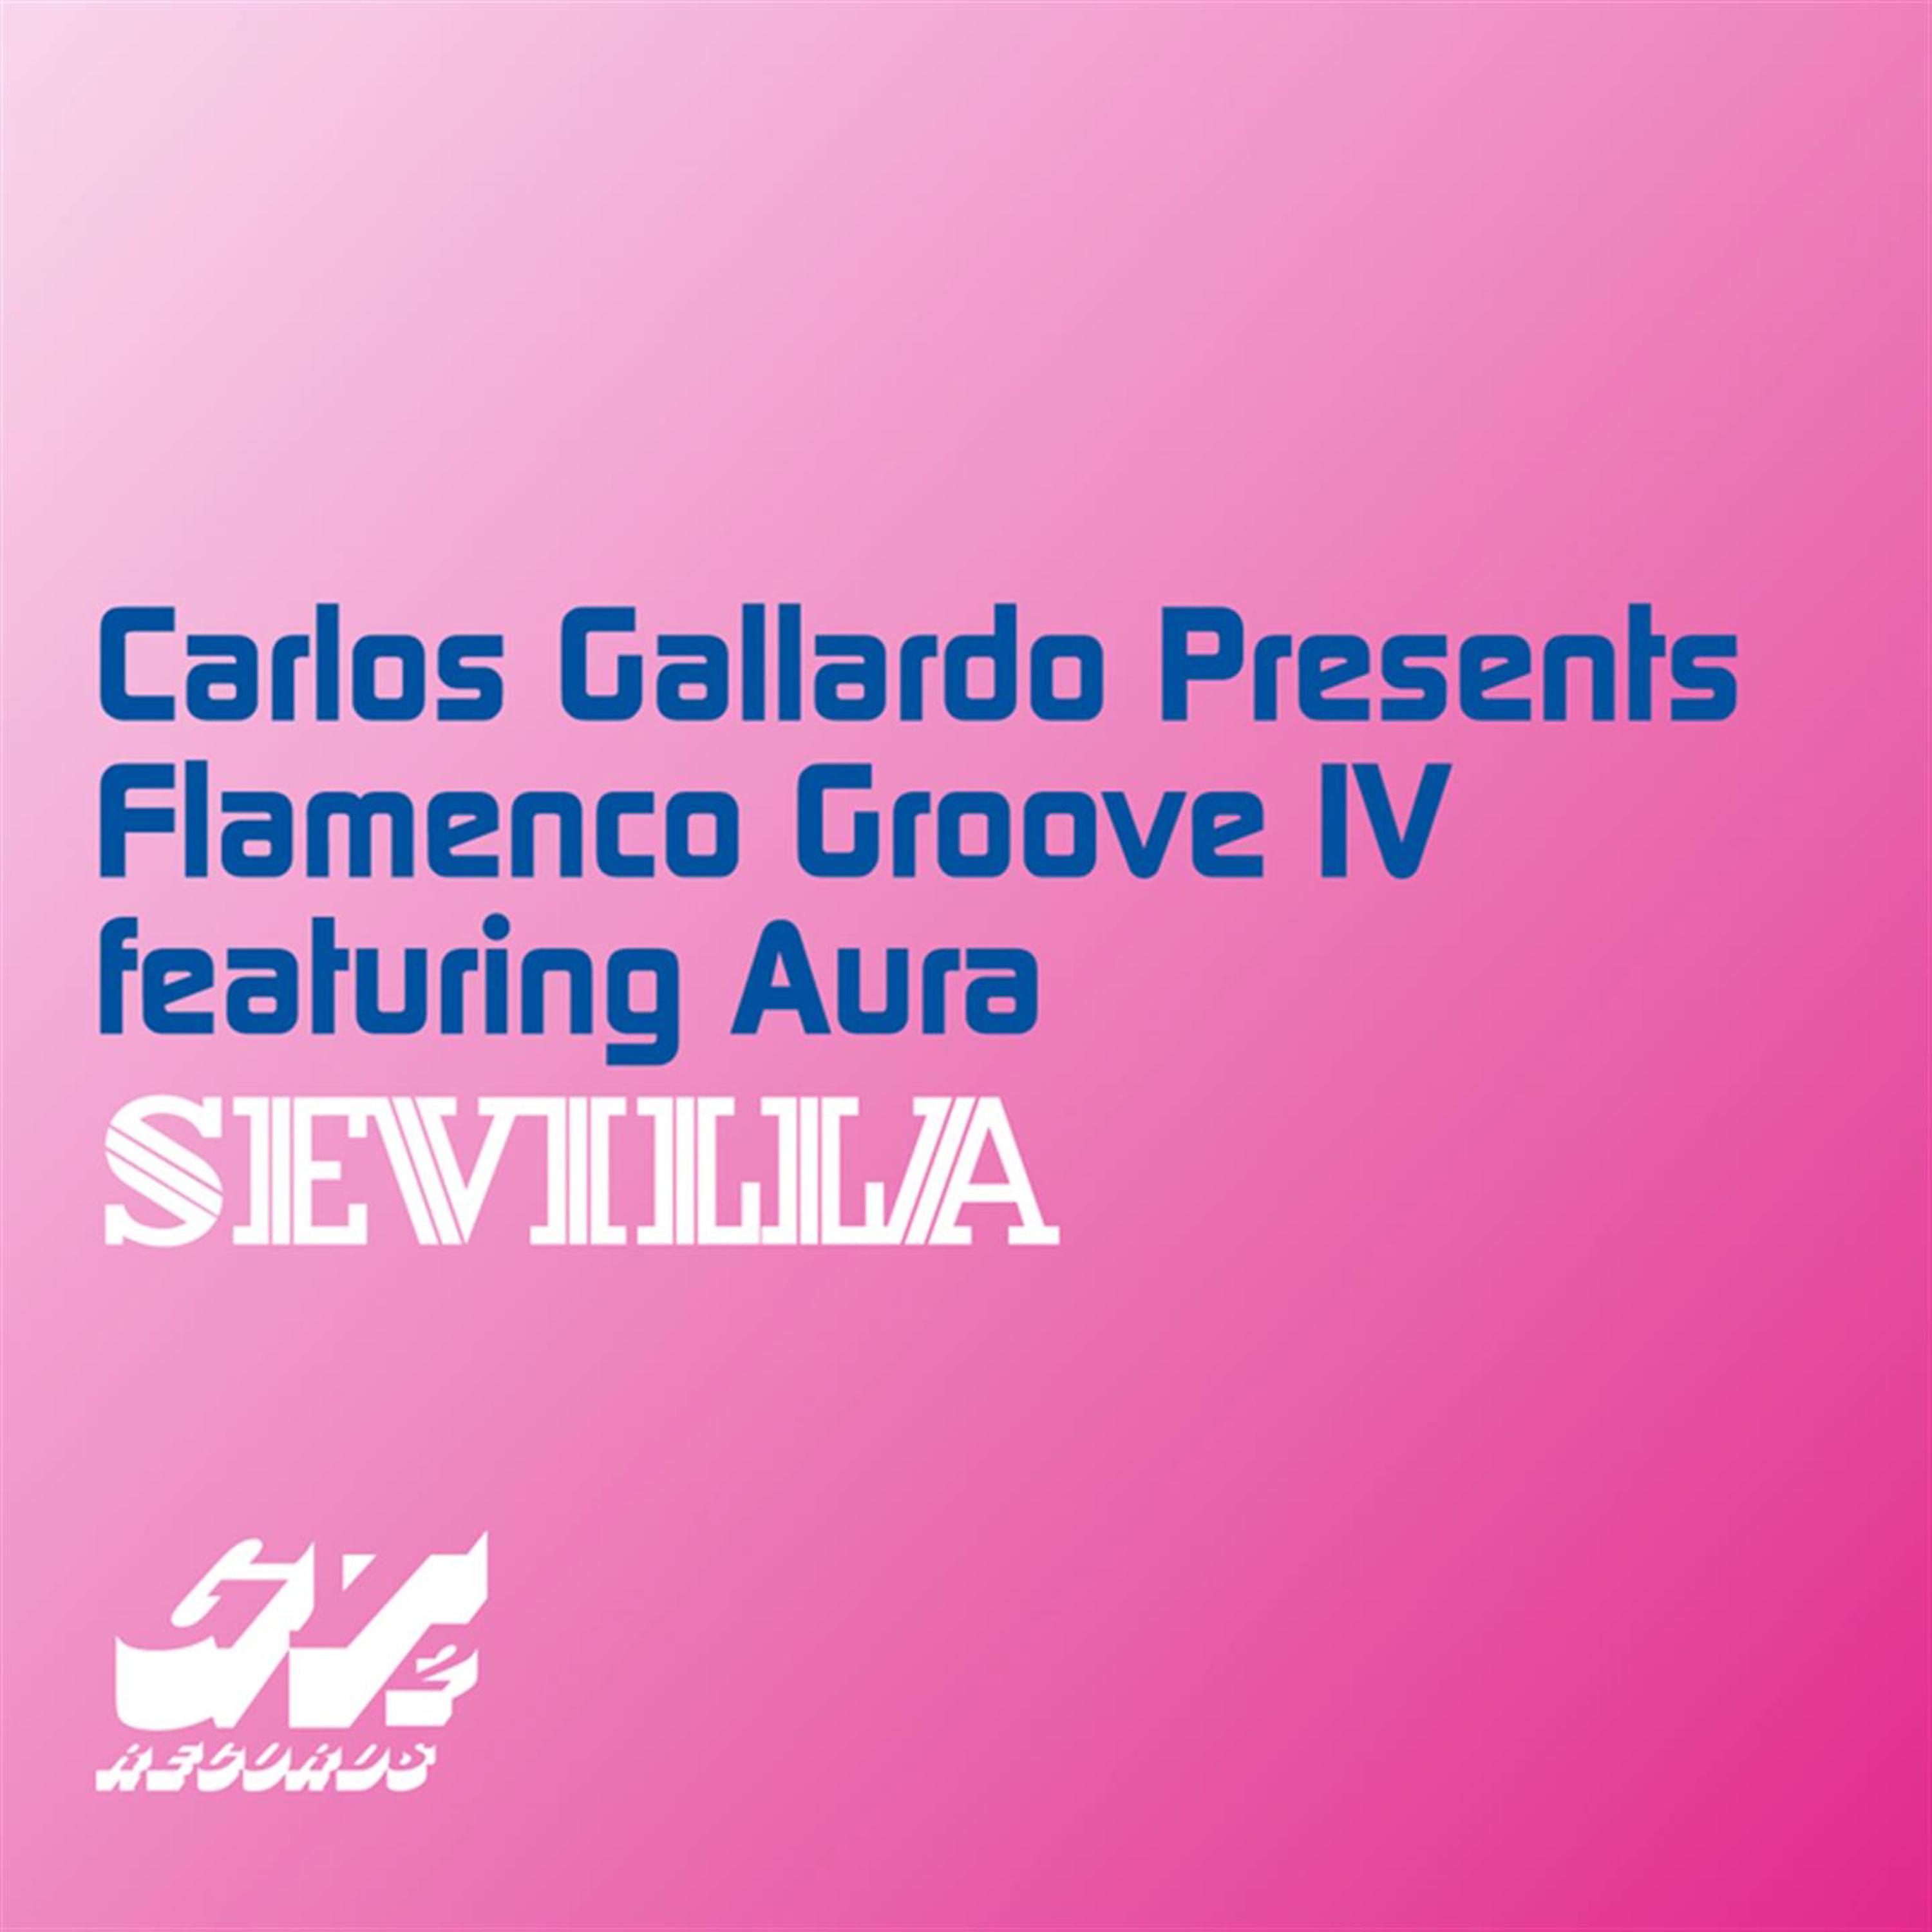 Постер альбома Sevilla